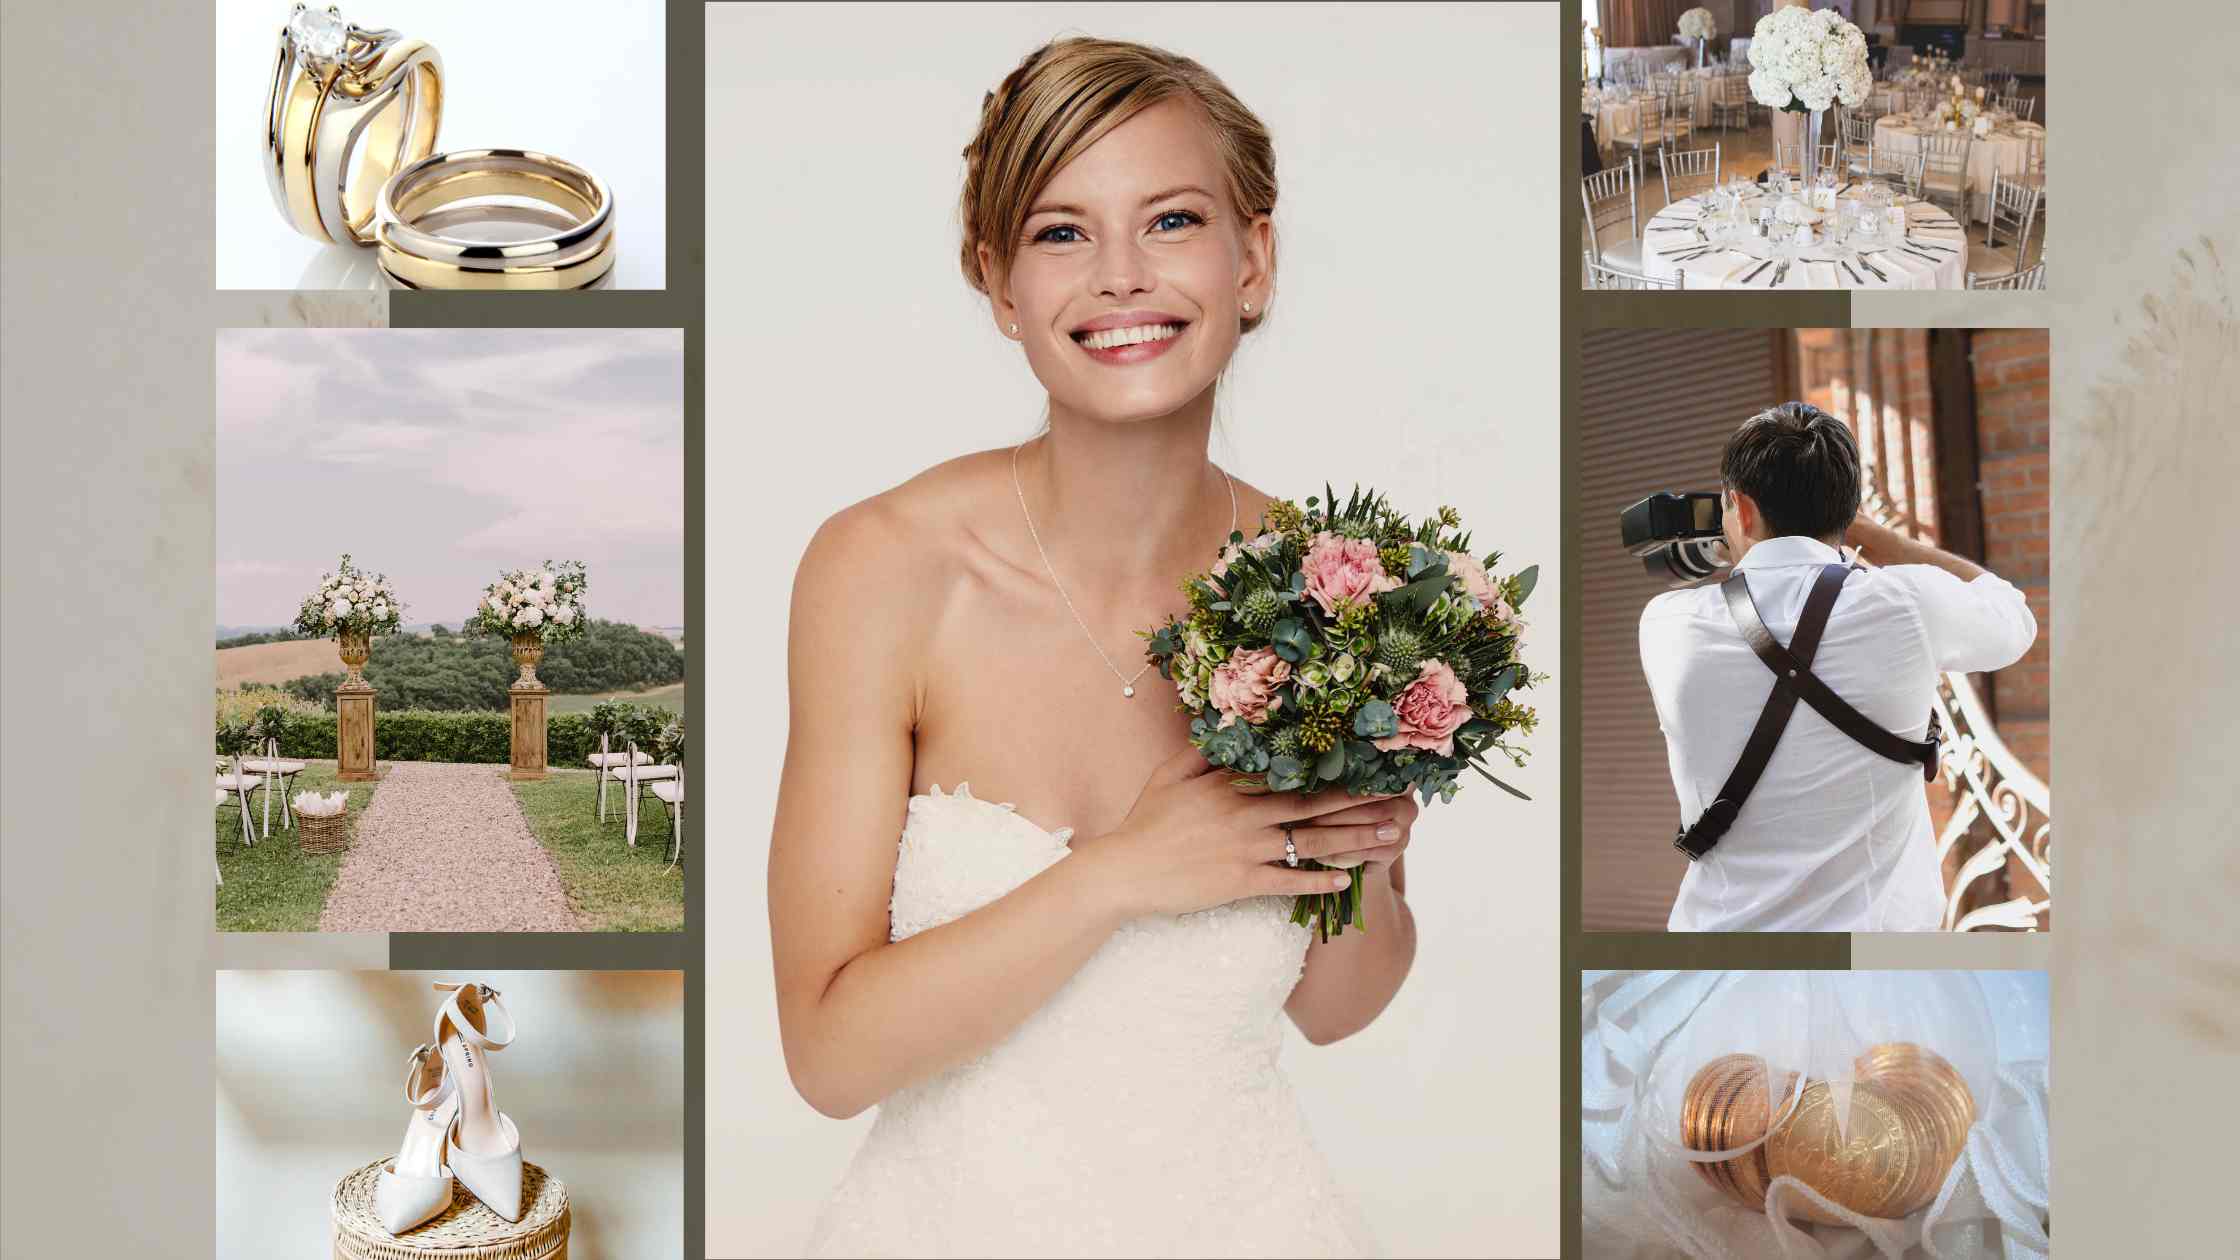 Charlotte Wedding Planning, Charlotte Wedding Photographers, Your Complete Wedding Planning Resource